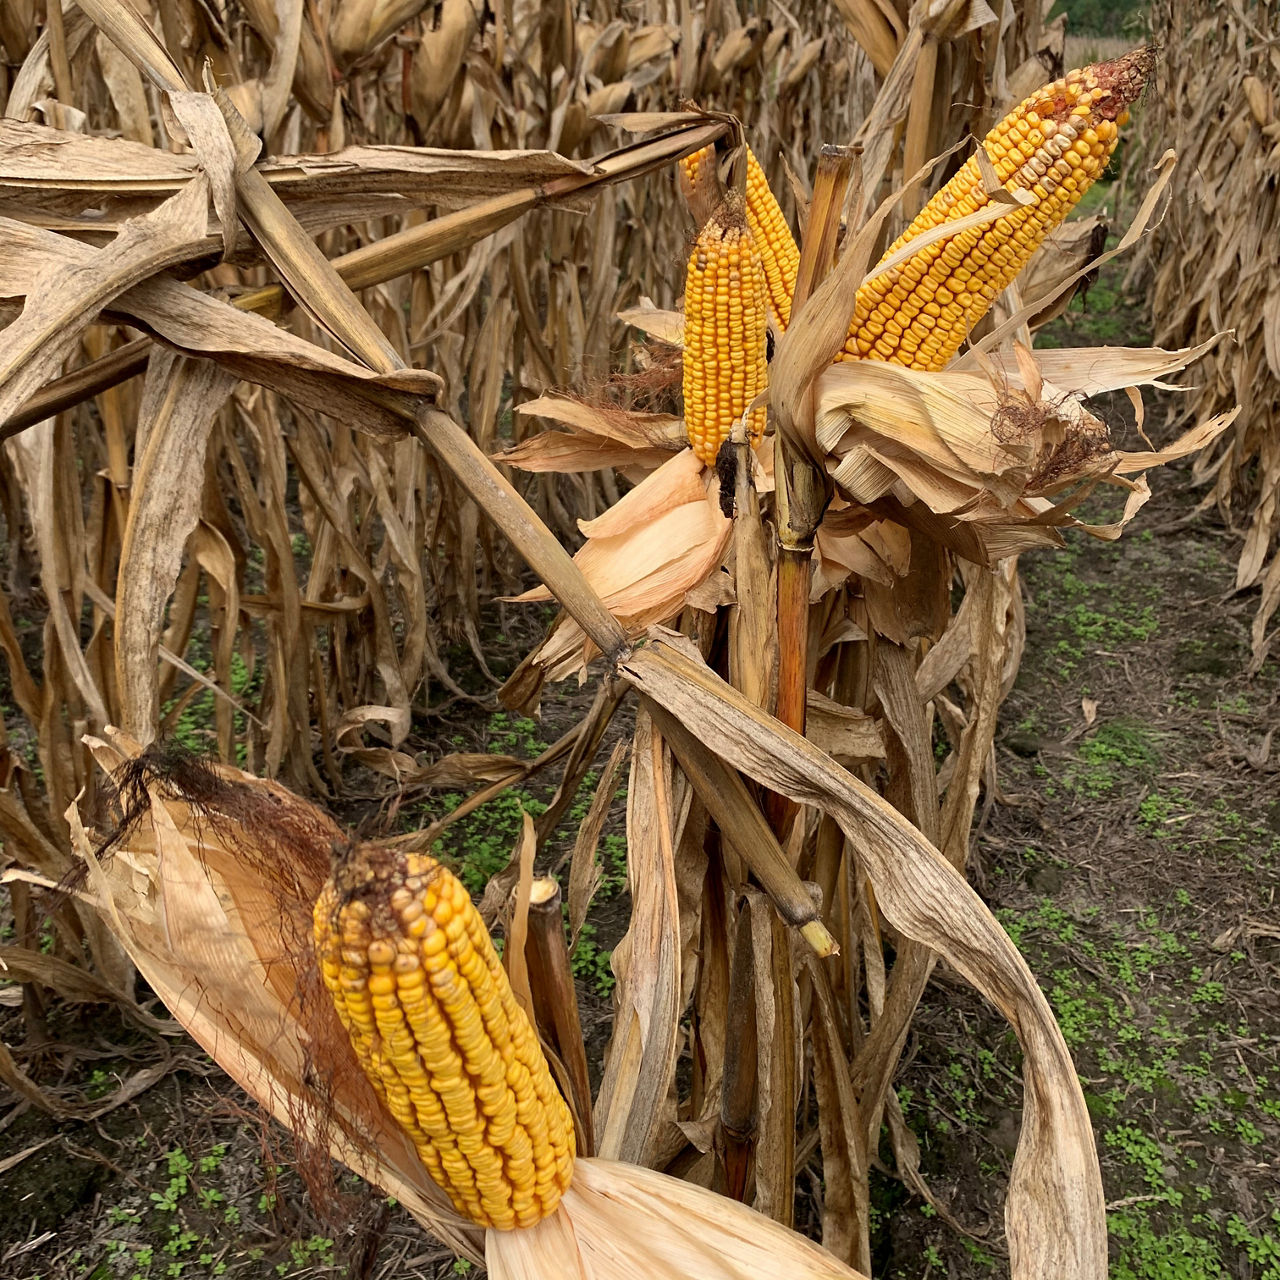 Corn on stalk at harvest